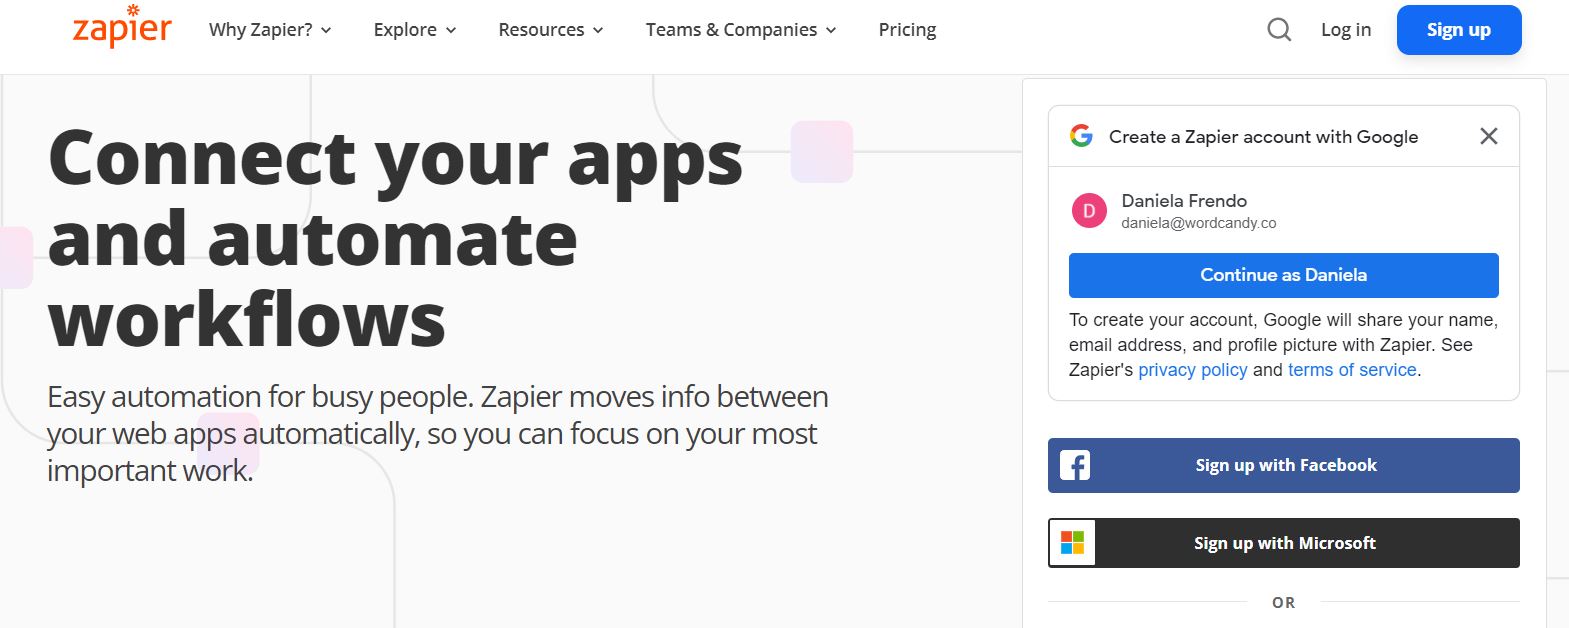 The Zapier homepage